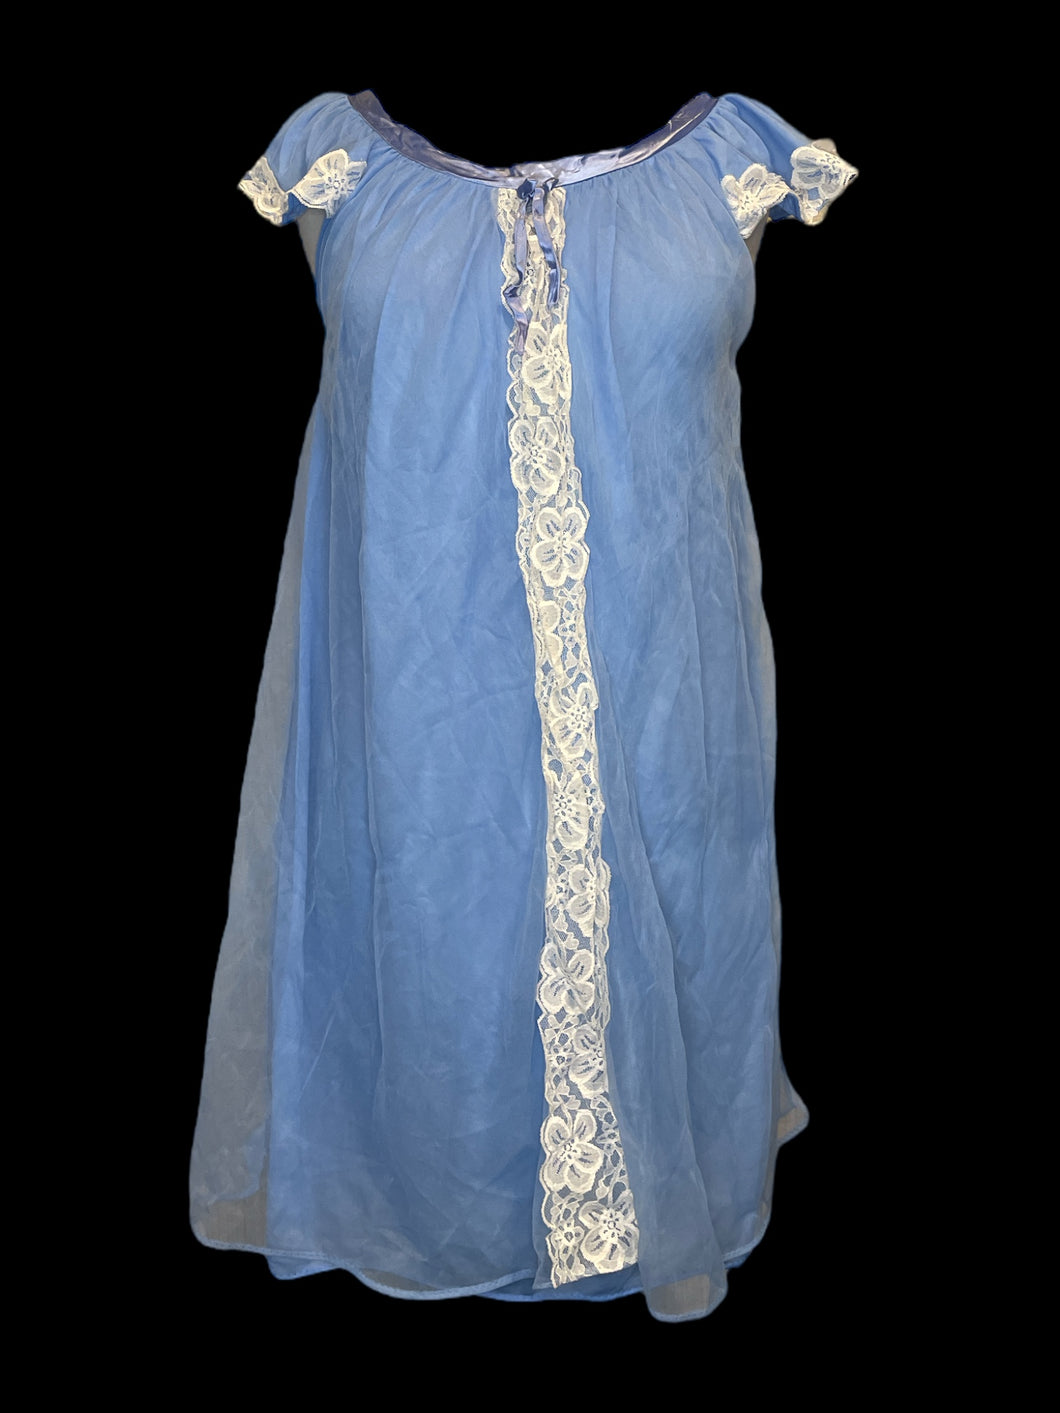 XL Periwinkle blue sheer mesh short cap sleeve dress w/ white lace accents, & tie detail